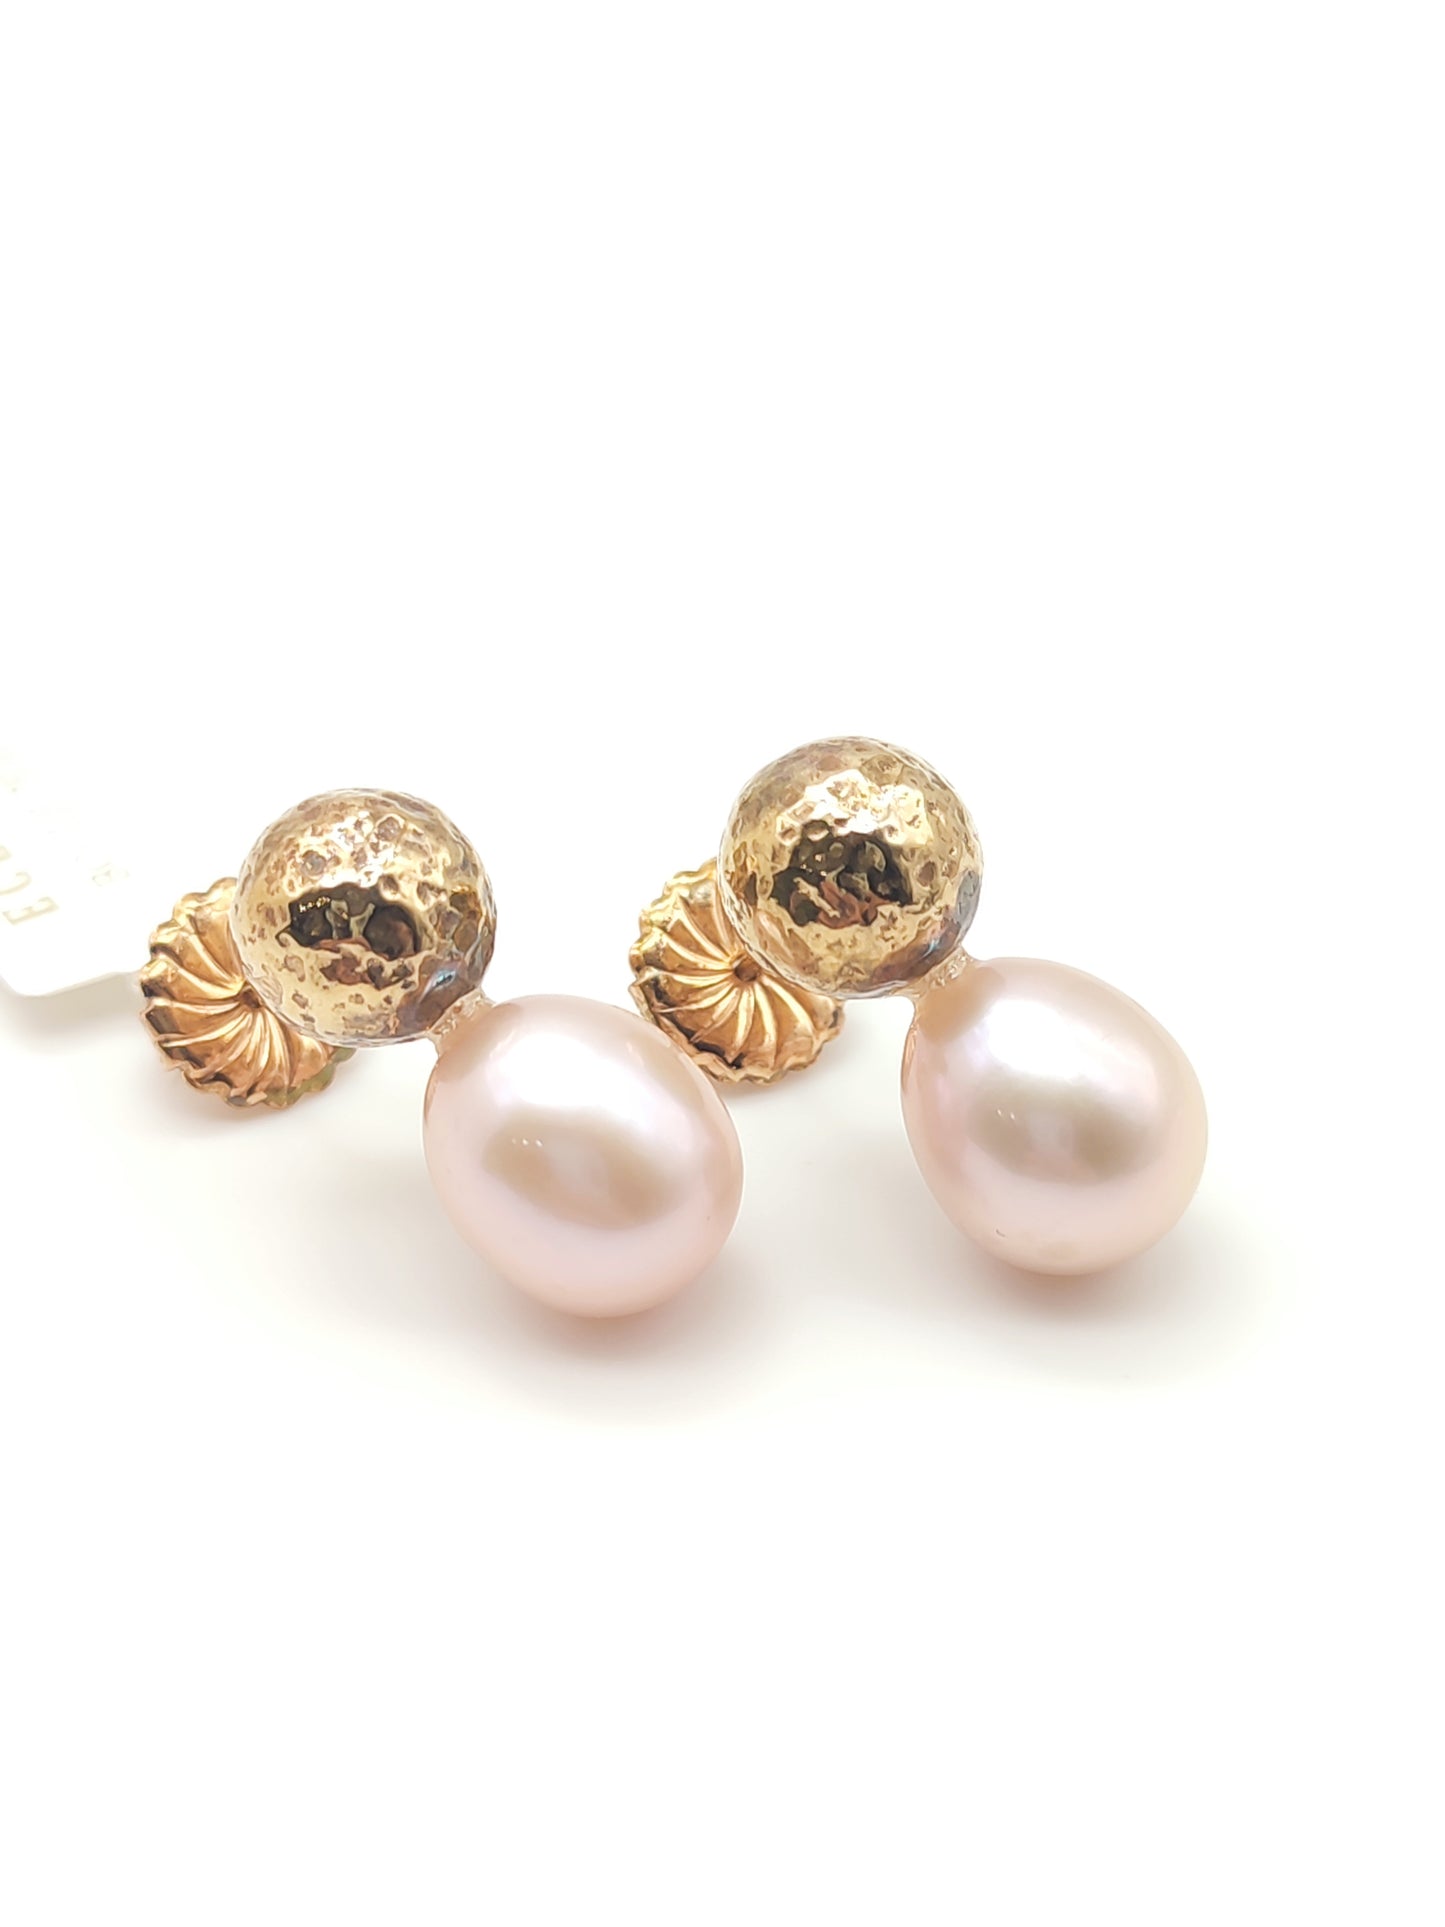 Silver earrings with Eclat pearls